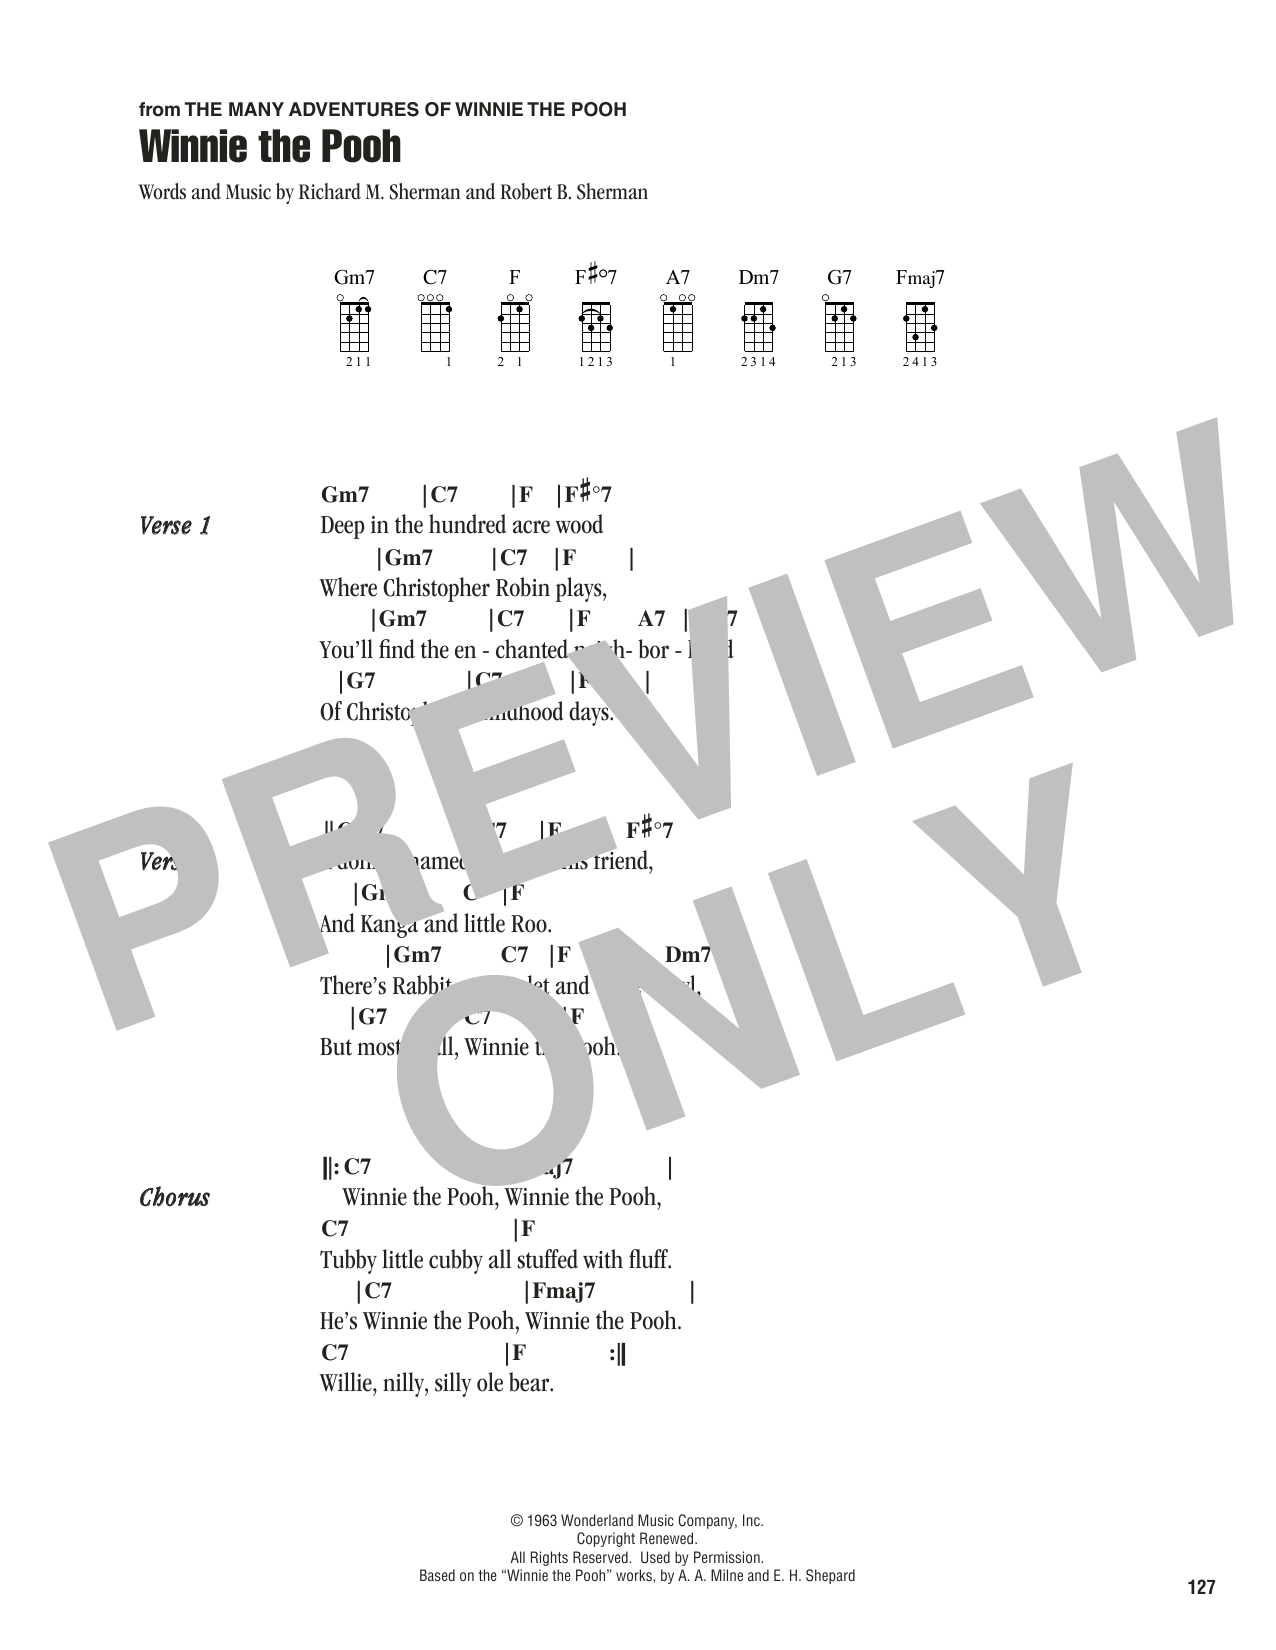 Sherman Brothers Winnie The Pooh Sheet Music Notes & Chords for Ukulele Chords/Lyrics - Download or Print PDF